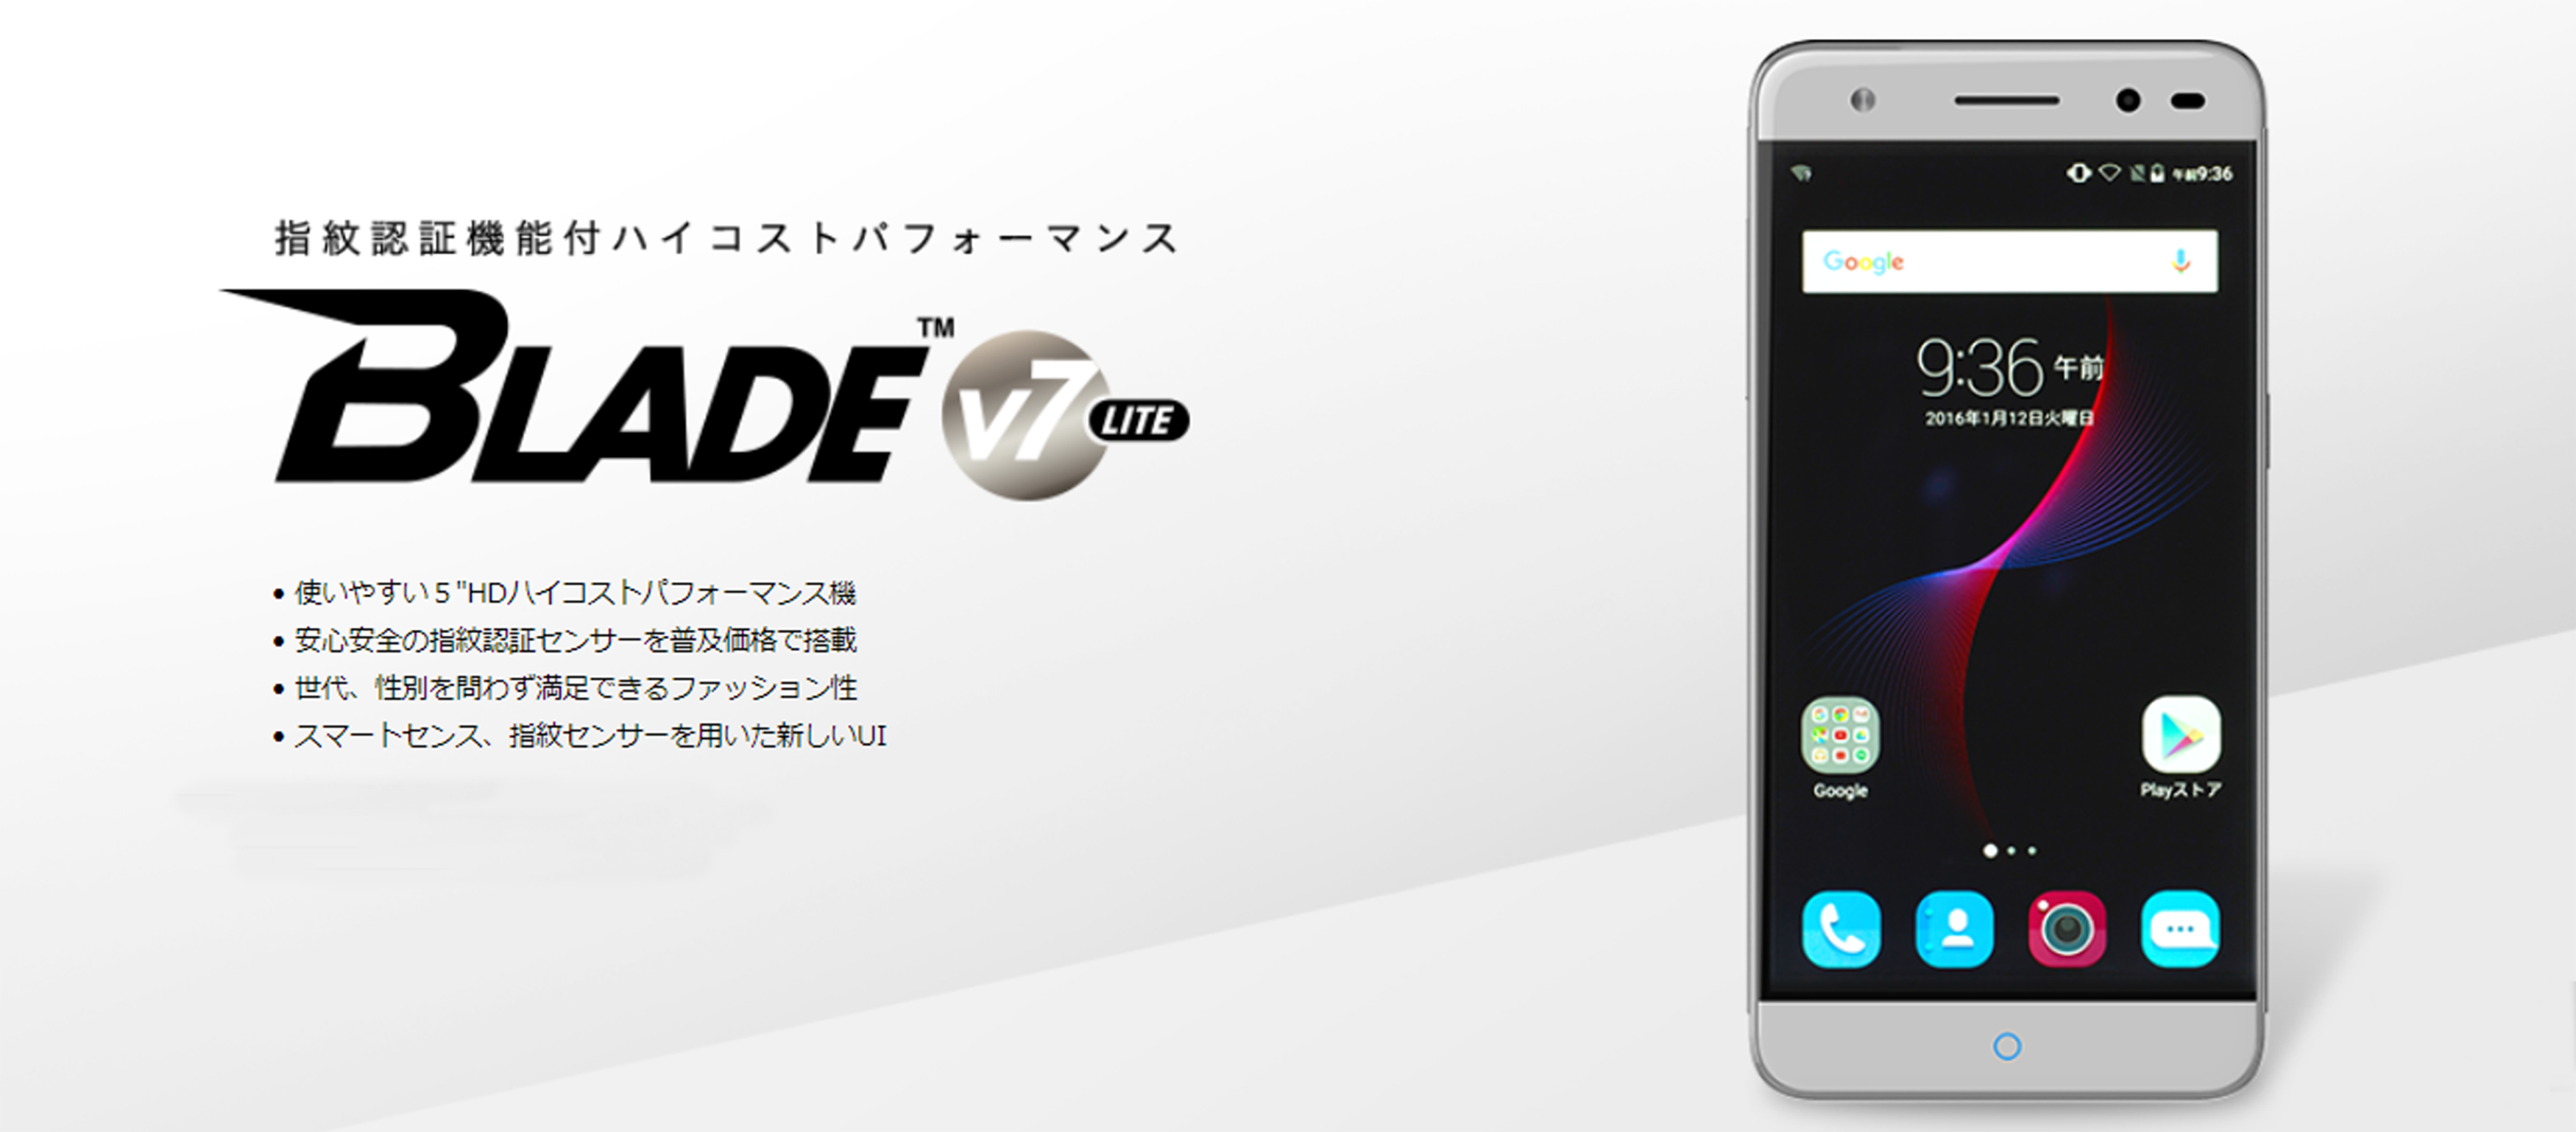 BLADE V7 Lite – ZTE Device Japan